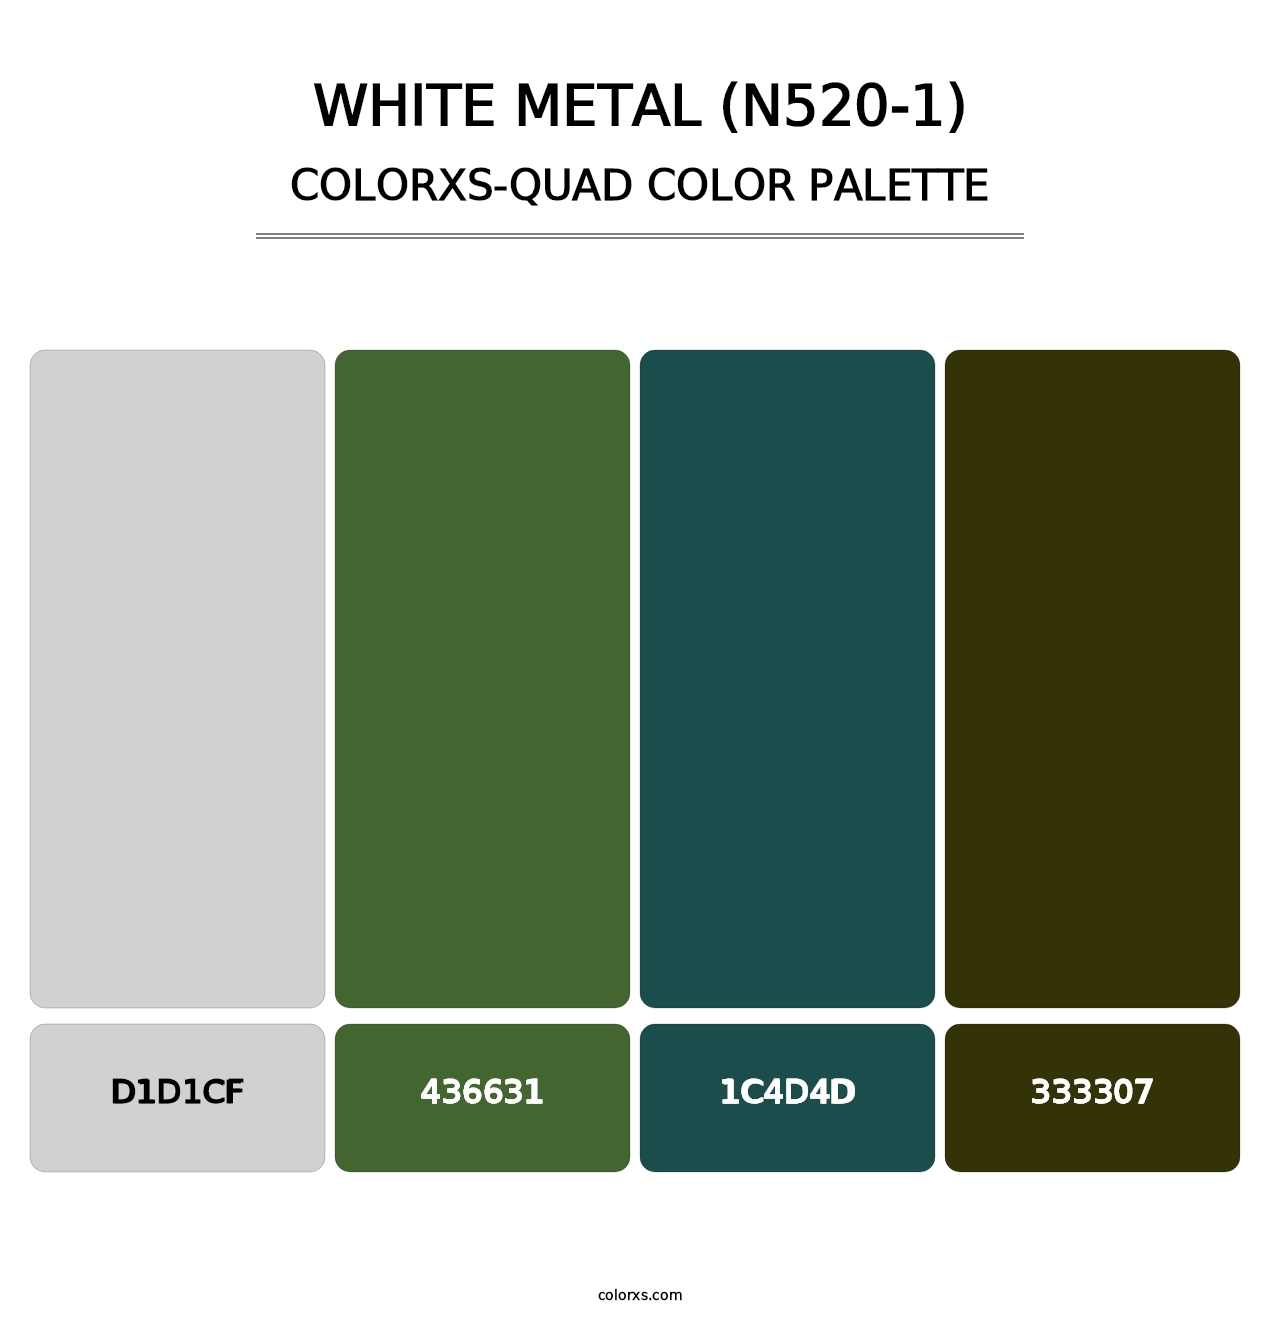 White Metal (N520-1) - Colorxs Quad Palette